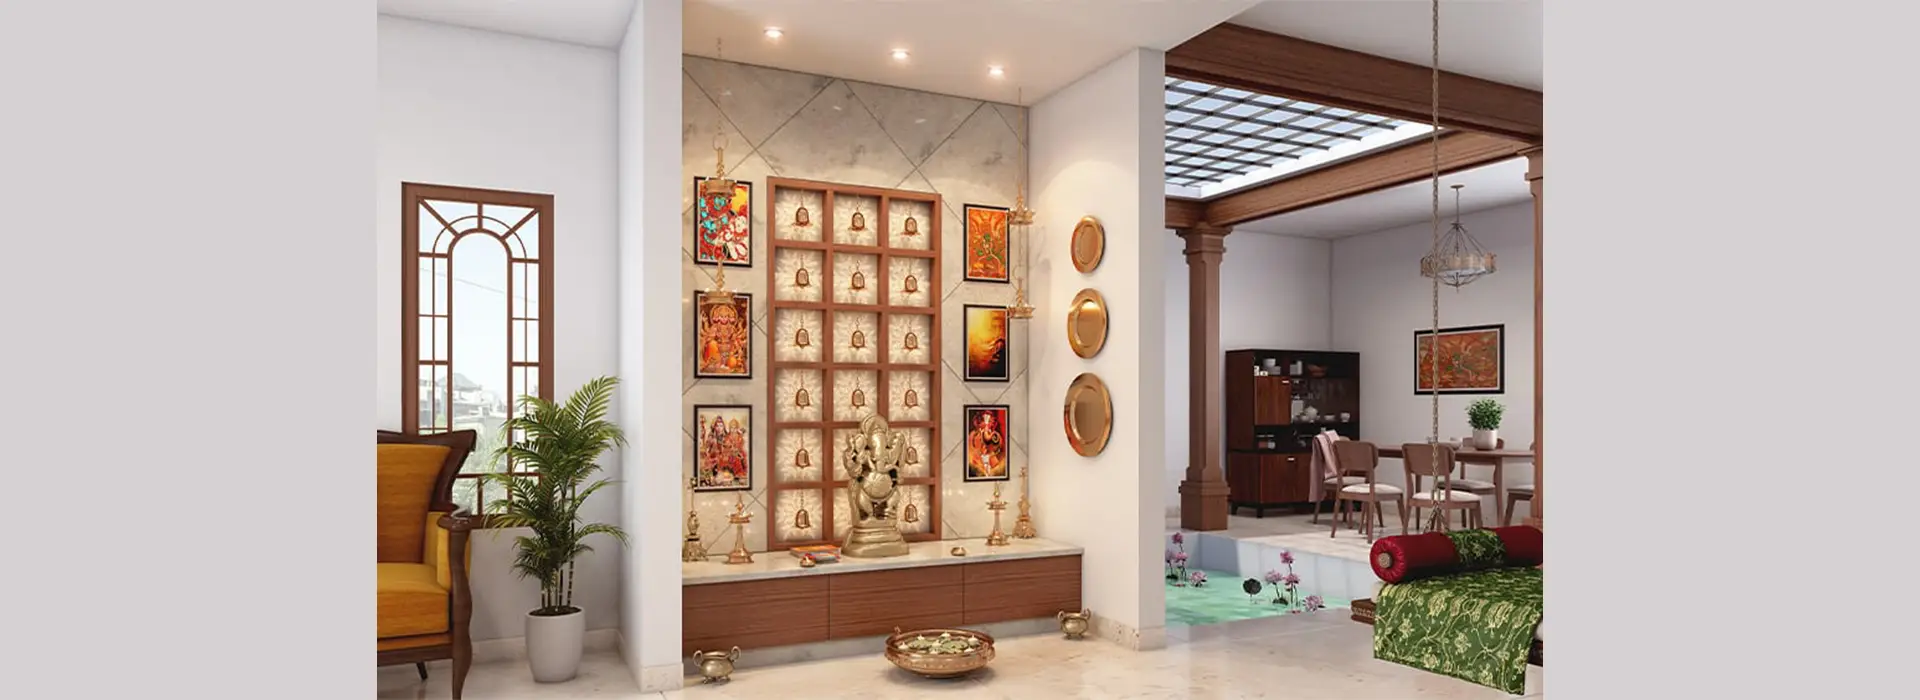 Pooja Room Interiors in Chennai